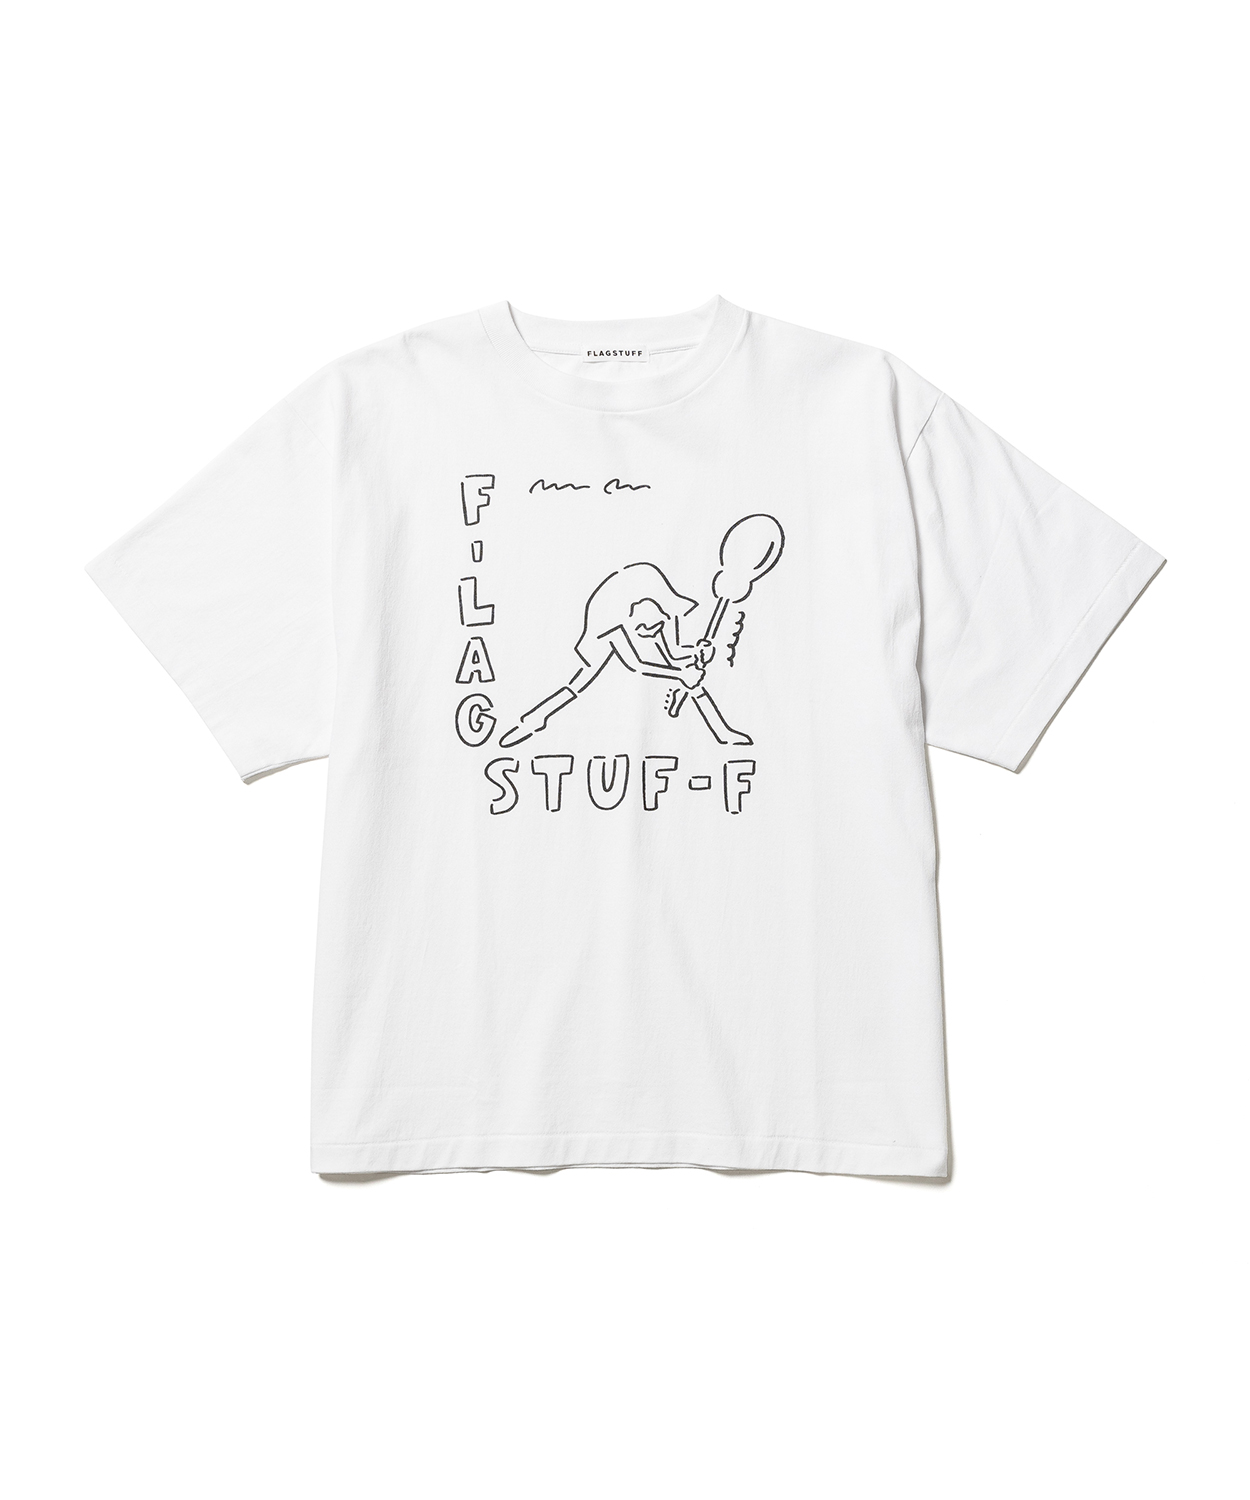 F-LAGSTUF-F × Yu NagabaのTシャツが8月21日にリリース